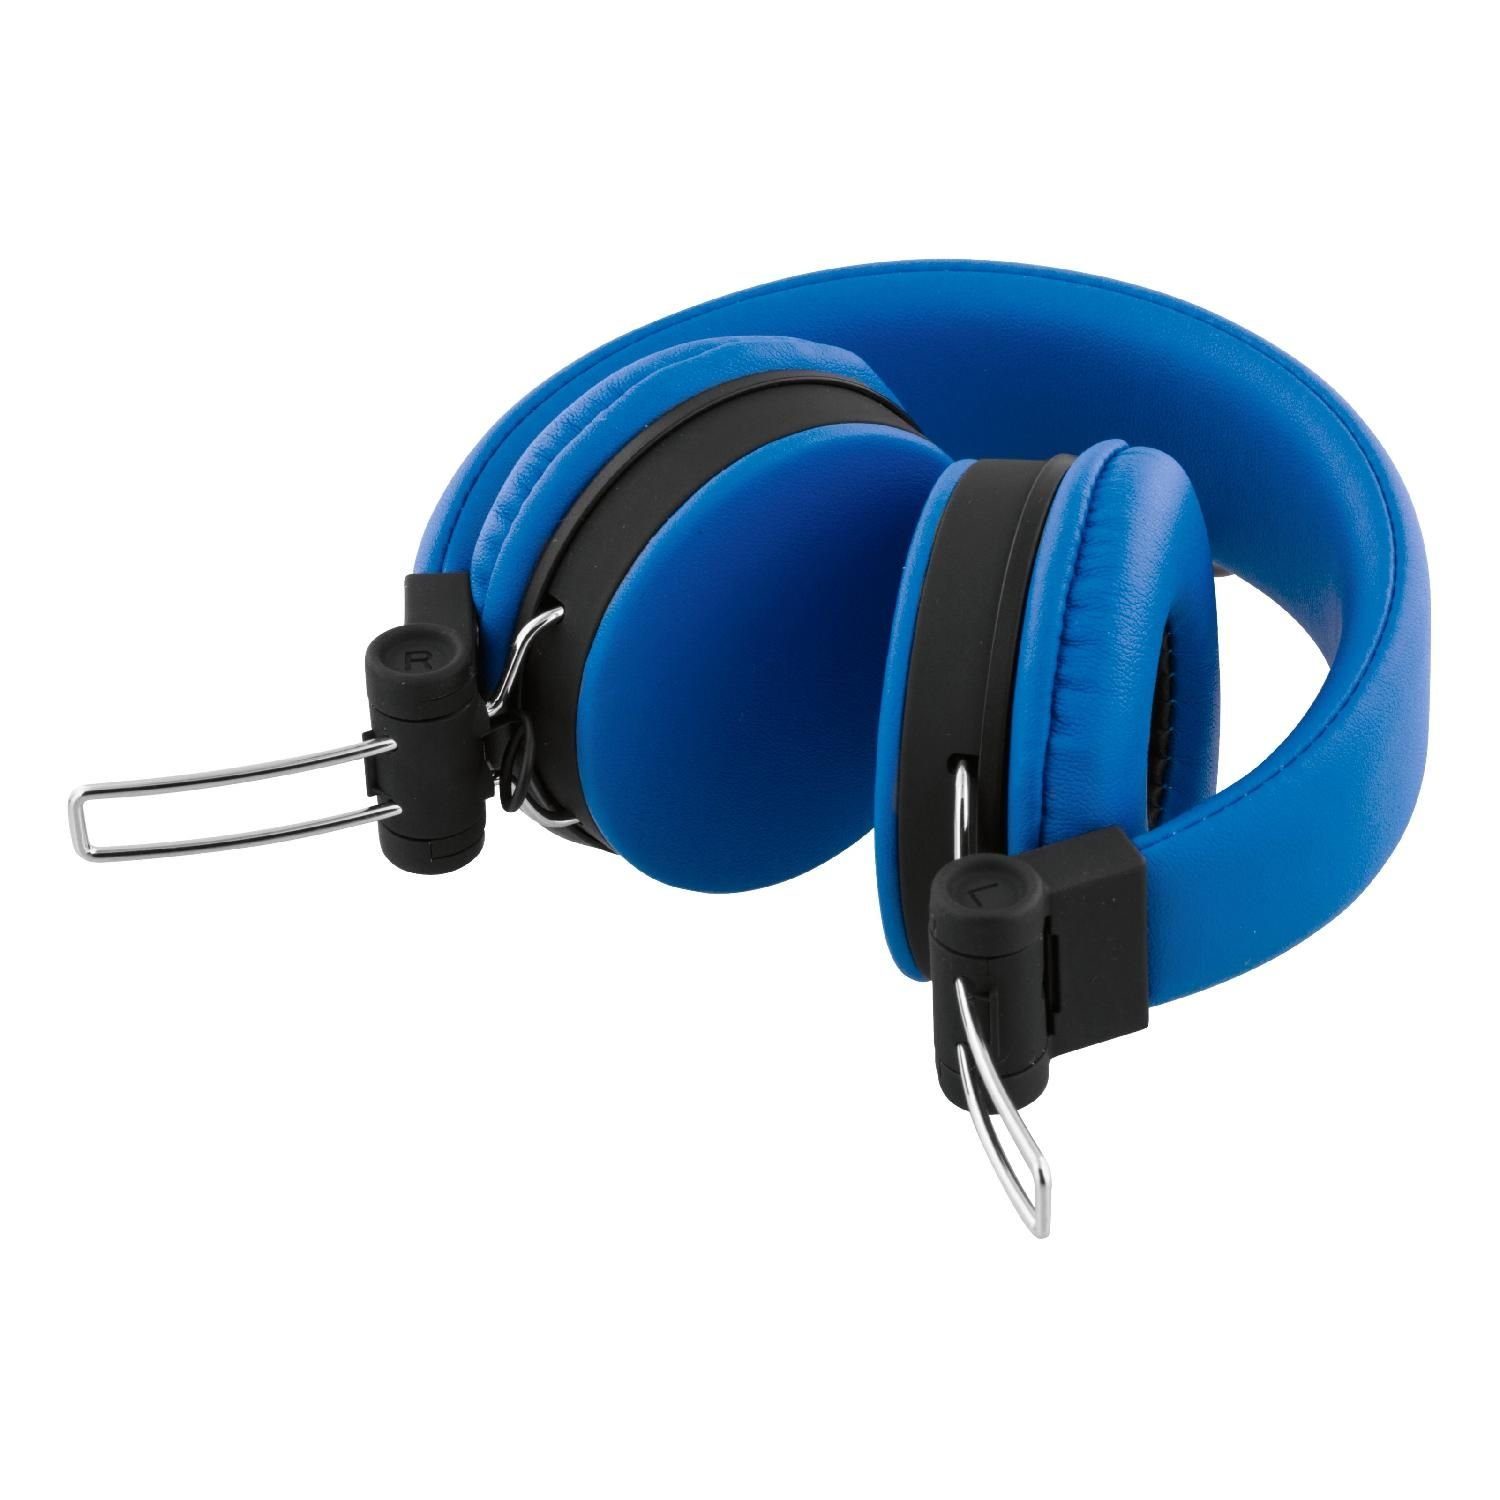 STREETZ Kopfhörer 1,2m Kabel 3.5mm faltbares (integriertes Jahre dunkelblau, Mikrofon, Ohrpolster 5 Klinkenanschluss On-Ear-Kopfhörer inkl. Herstellergarantie) Headset